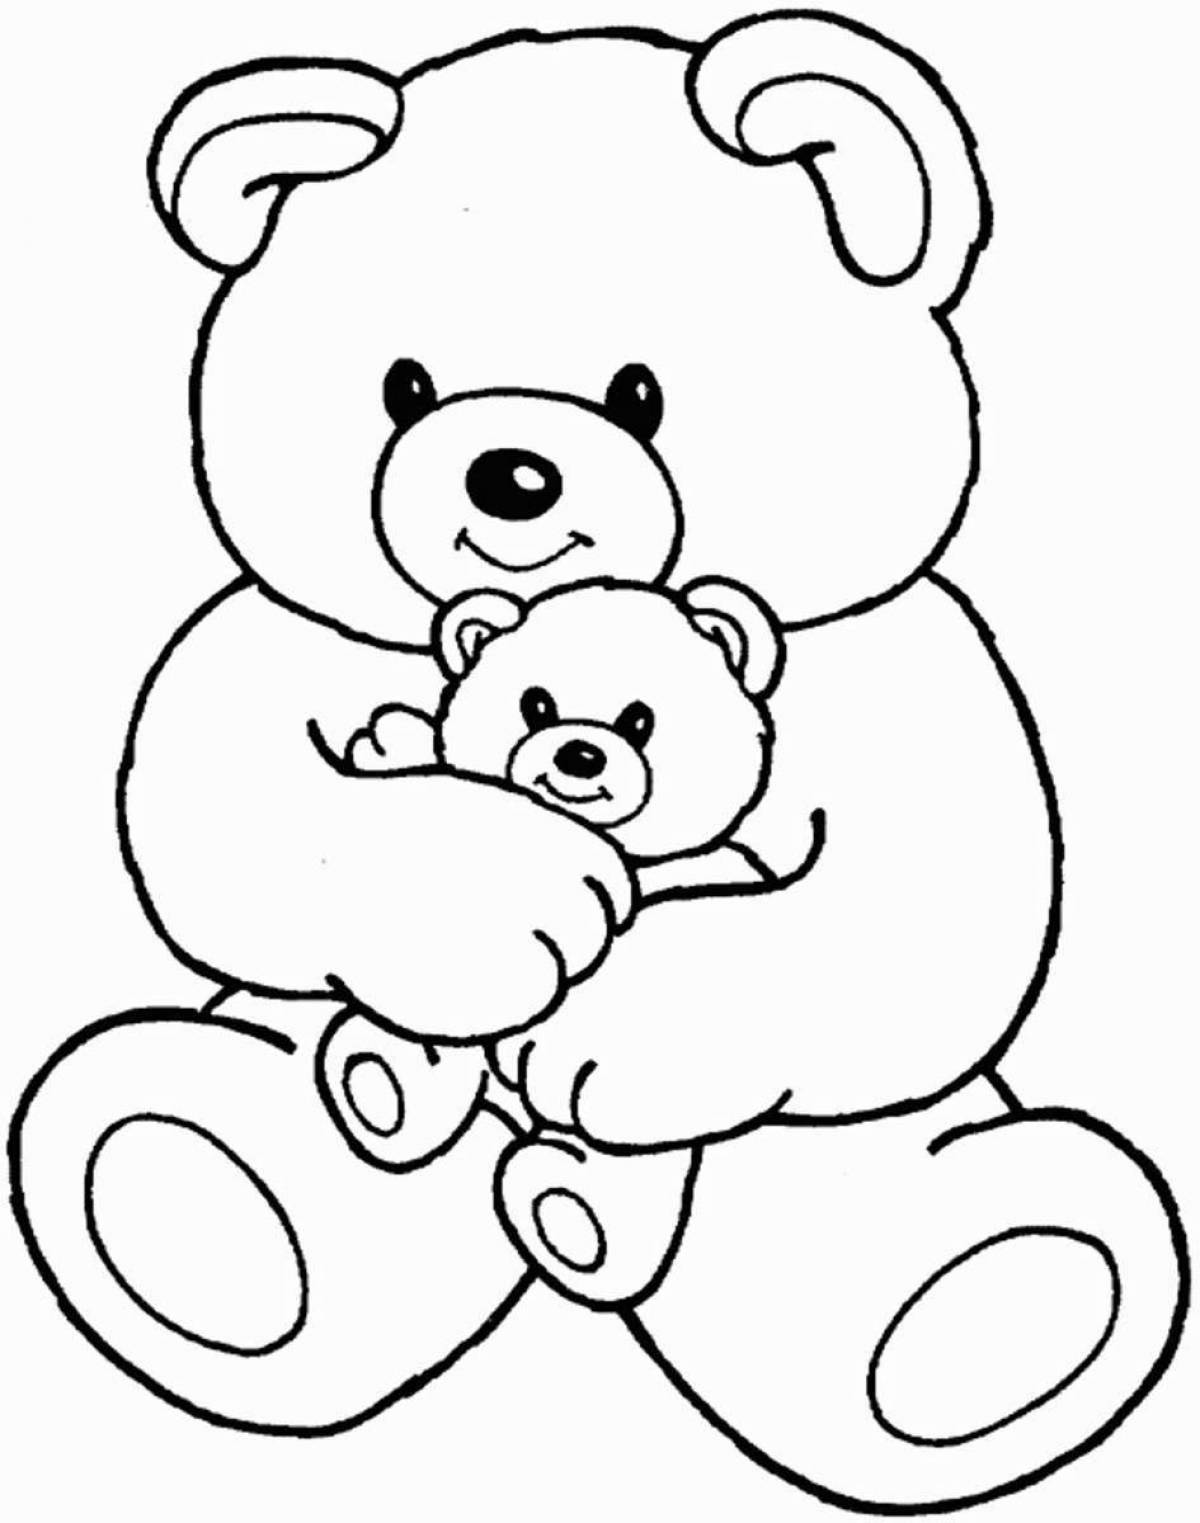 Shiny teddy bear coloring book